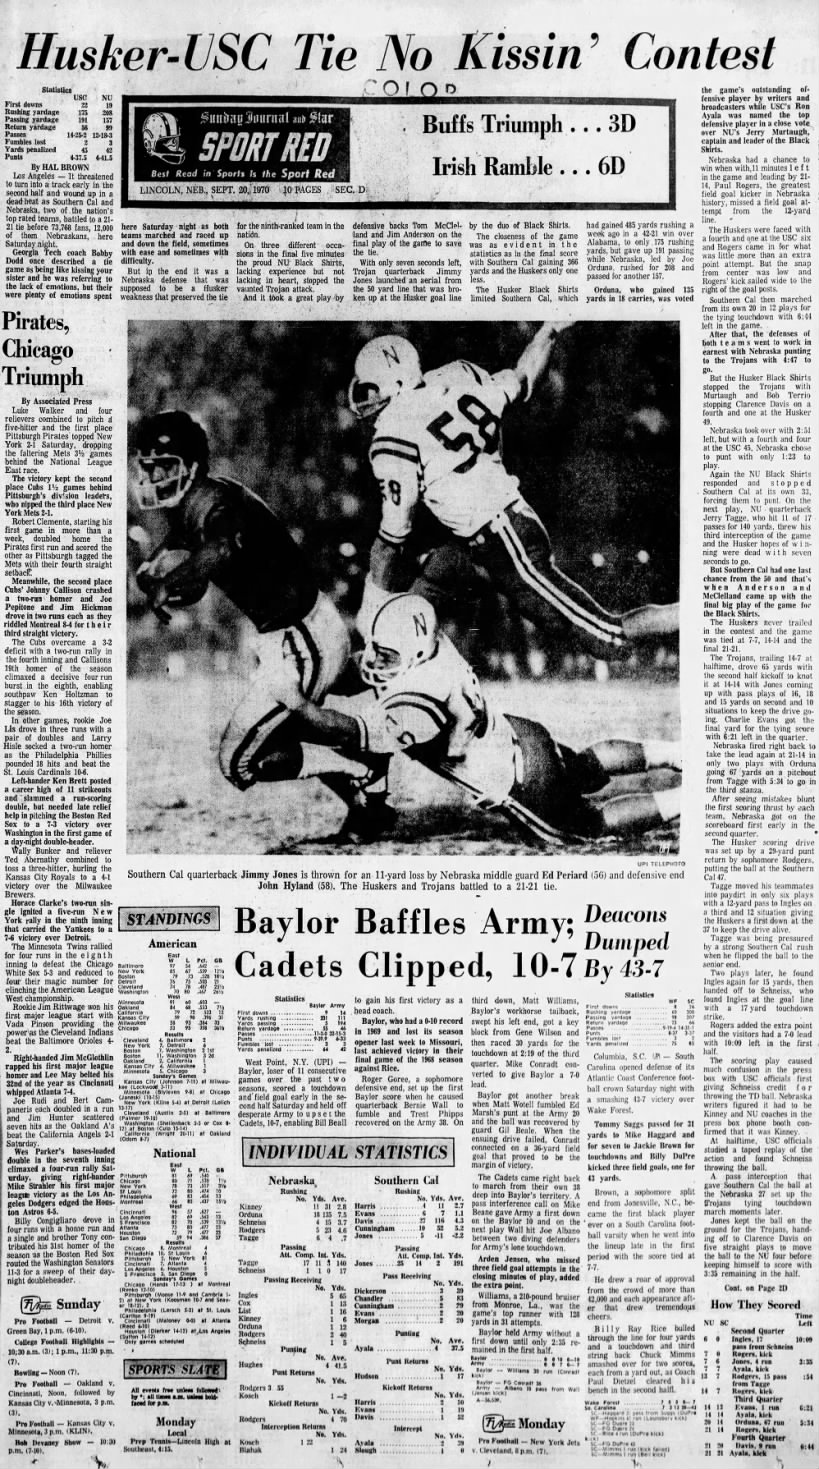 1970 Nebraska-USC football, LJS1